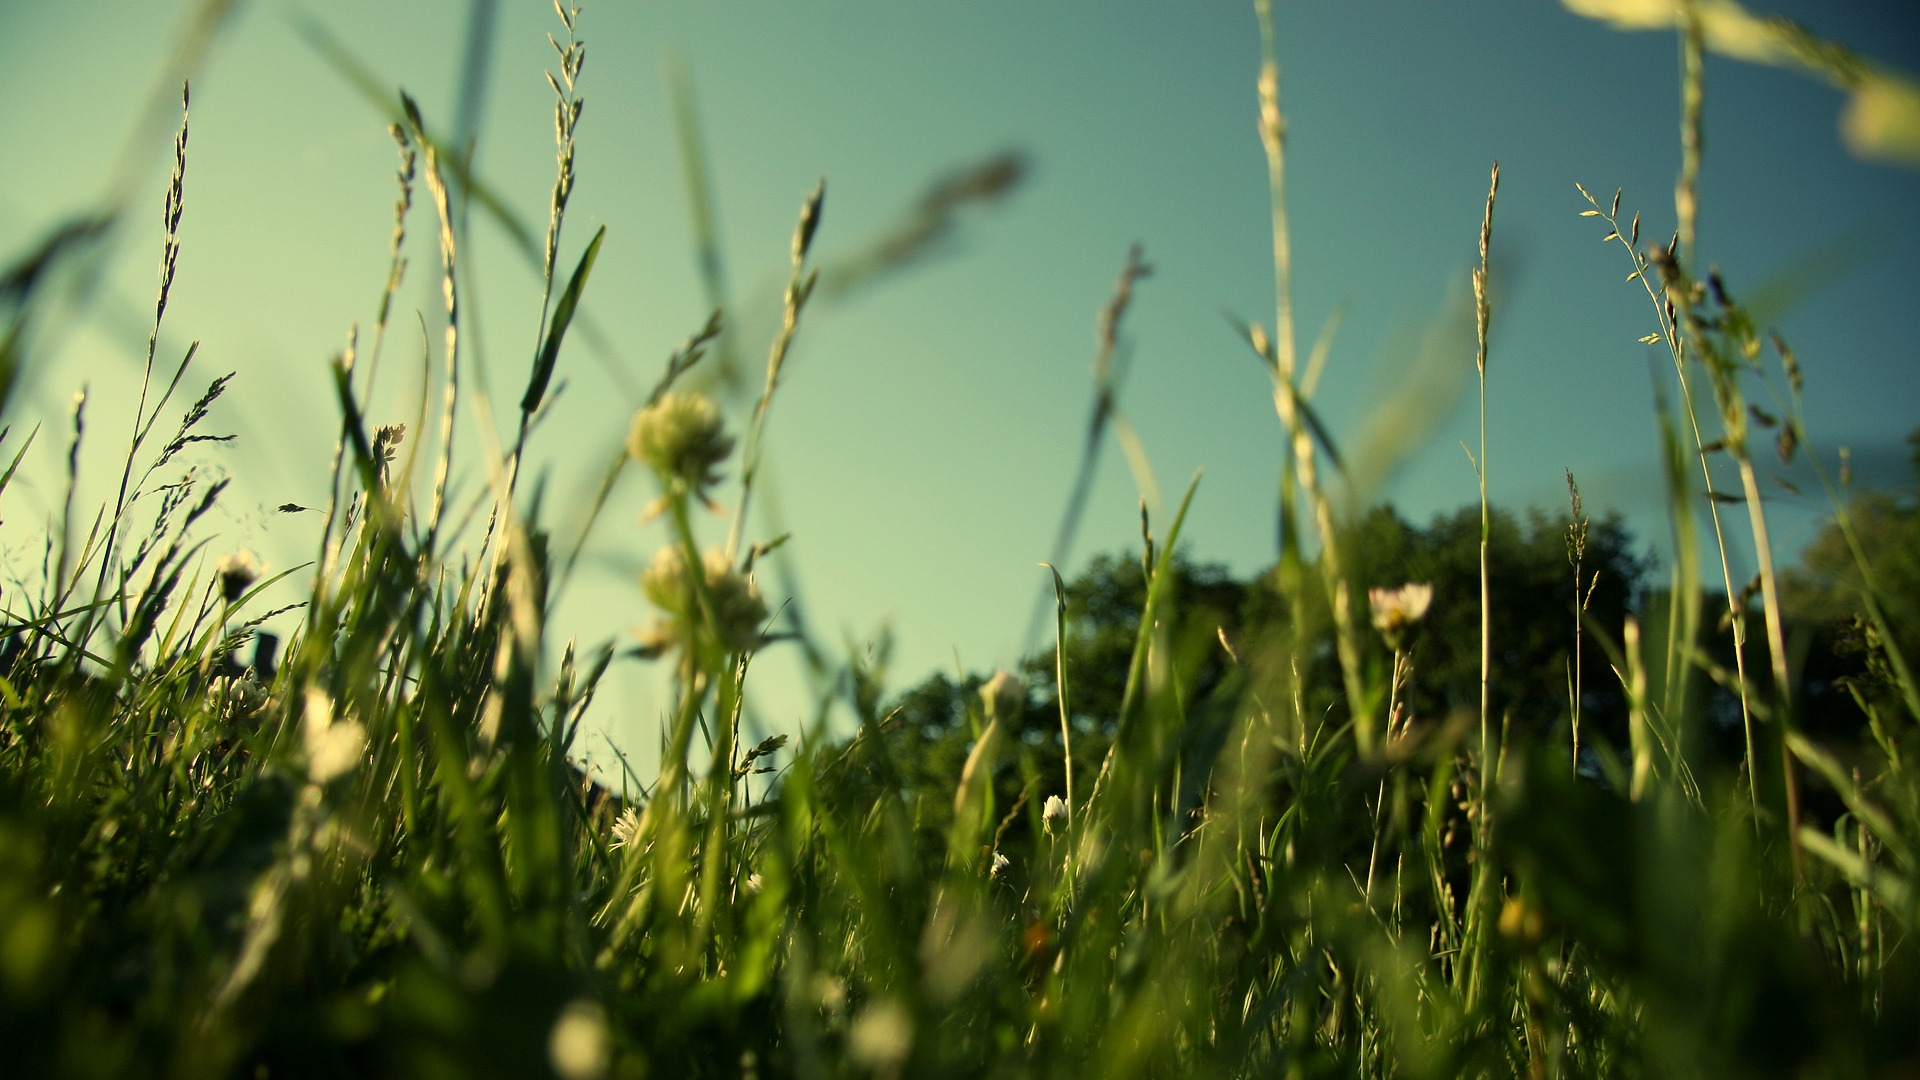 Evening Grass for 1920 x 1080 HDTV 1080p resolution